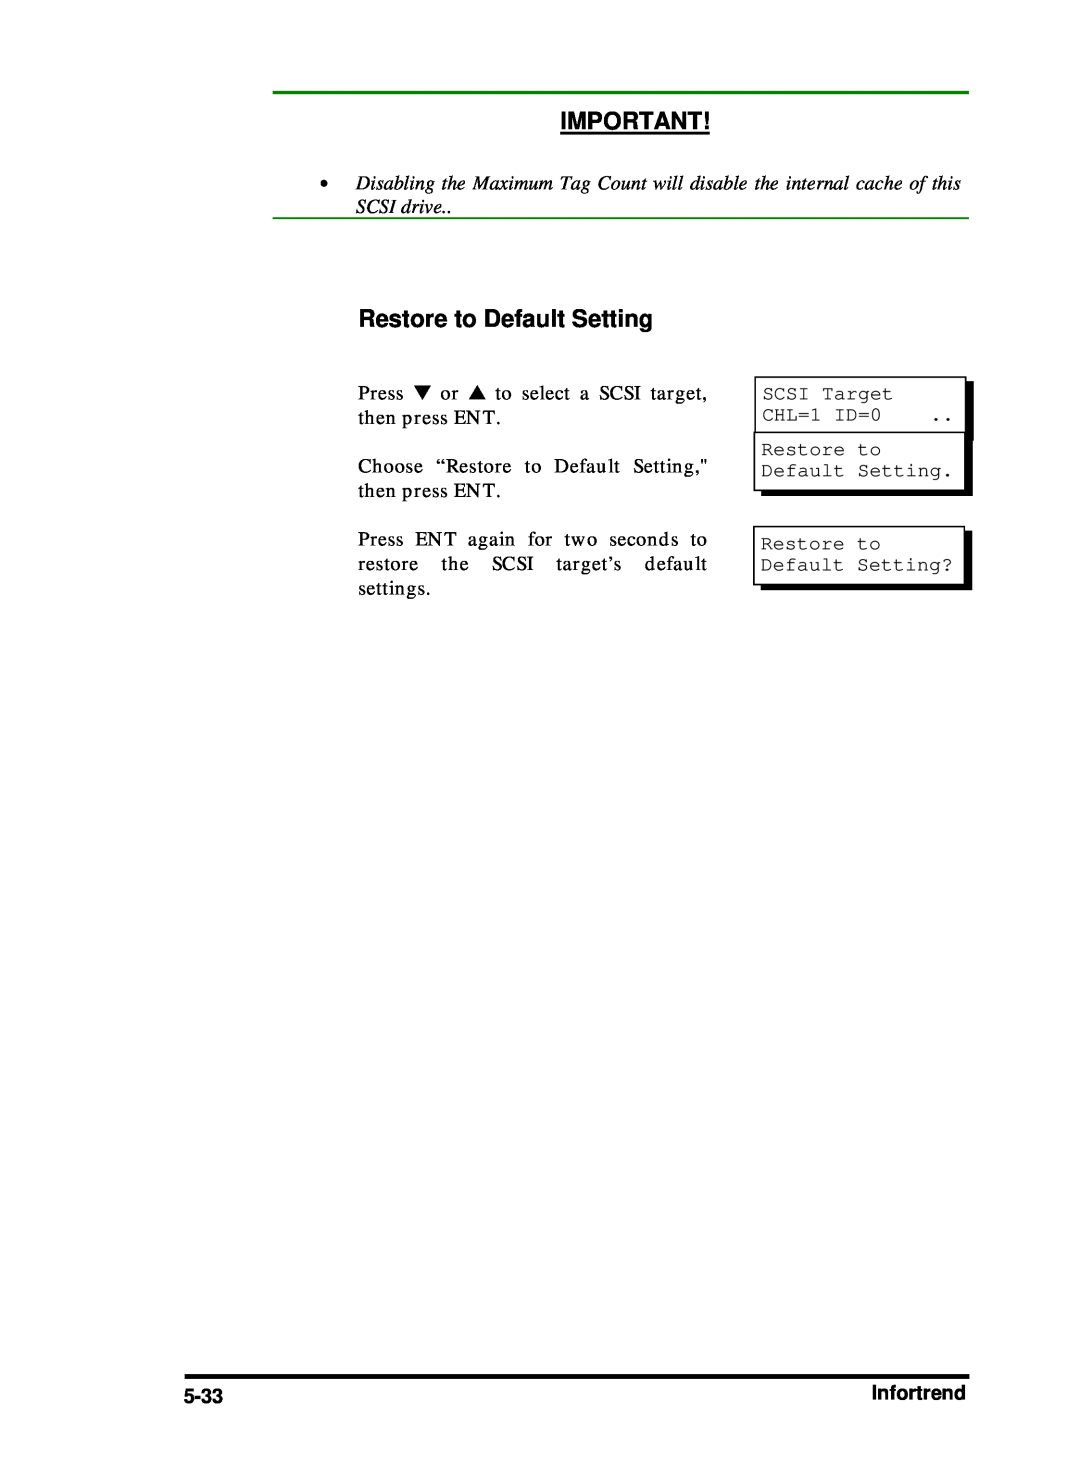 Compaq Infortrend manual Restore to Default Setting Restore to Default Setting?, SCSI Target, CHL=1 ID=0 